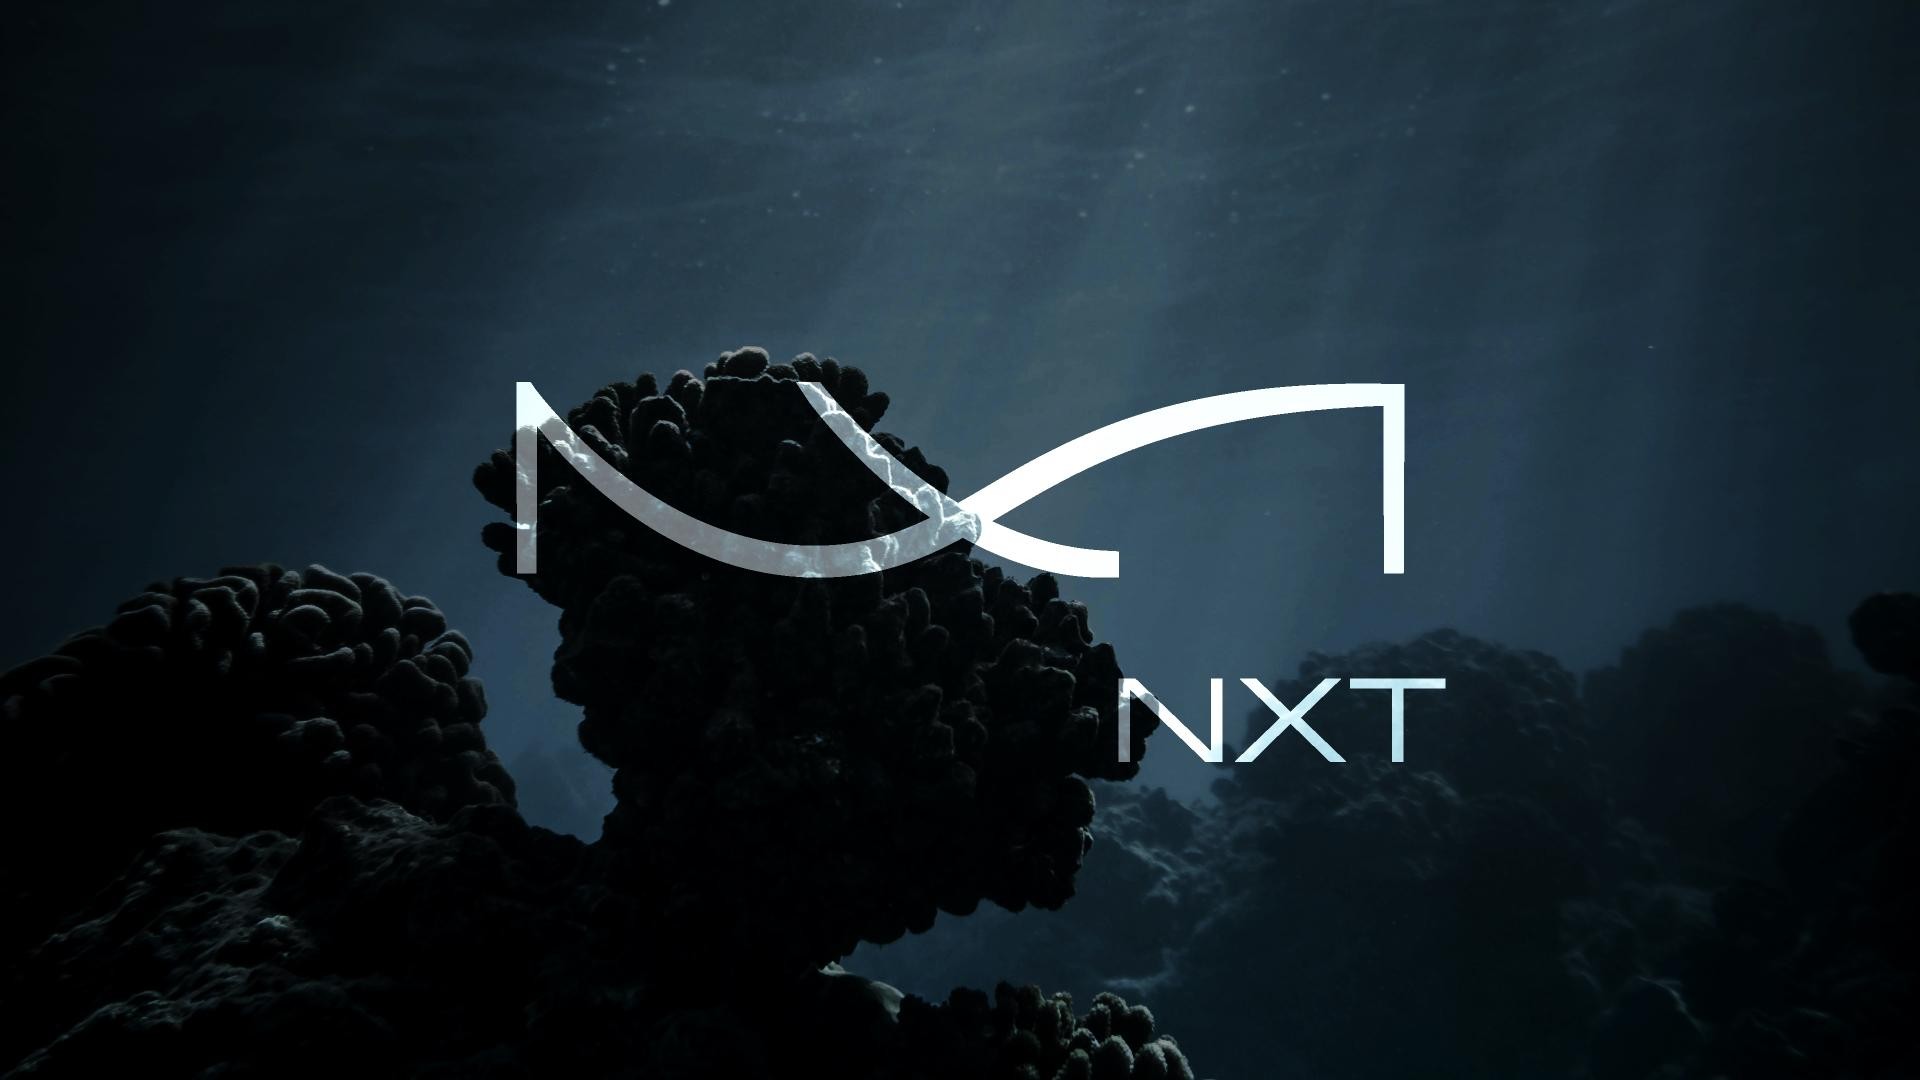 Oceanco NXT